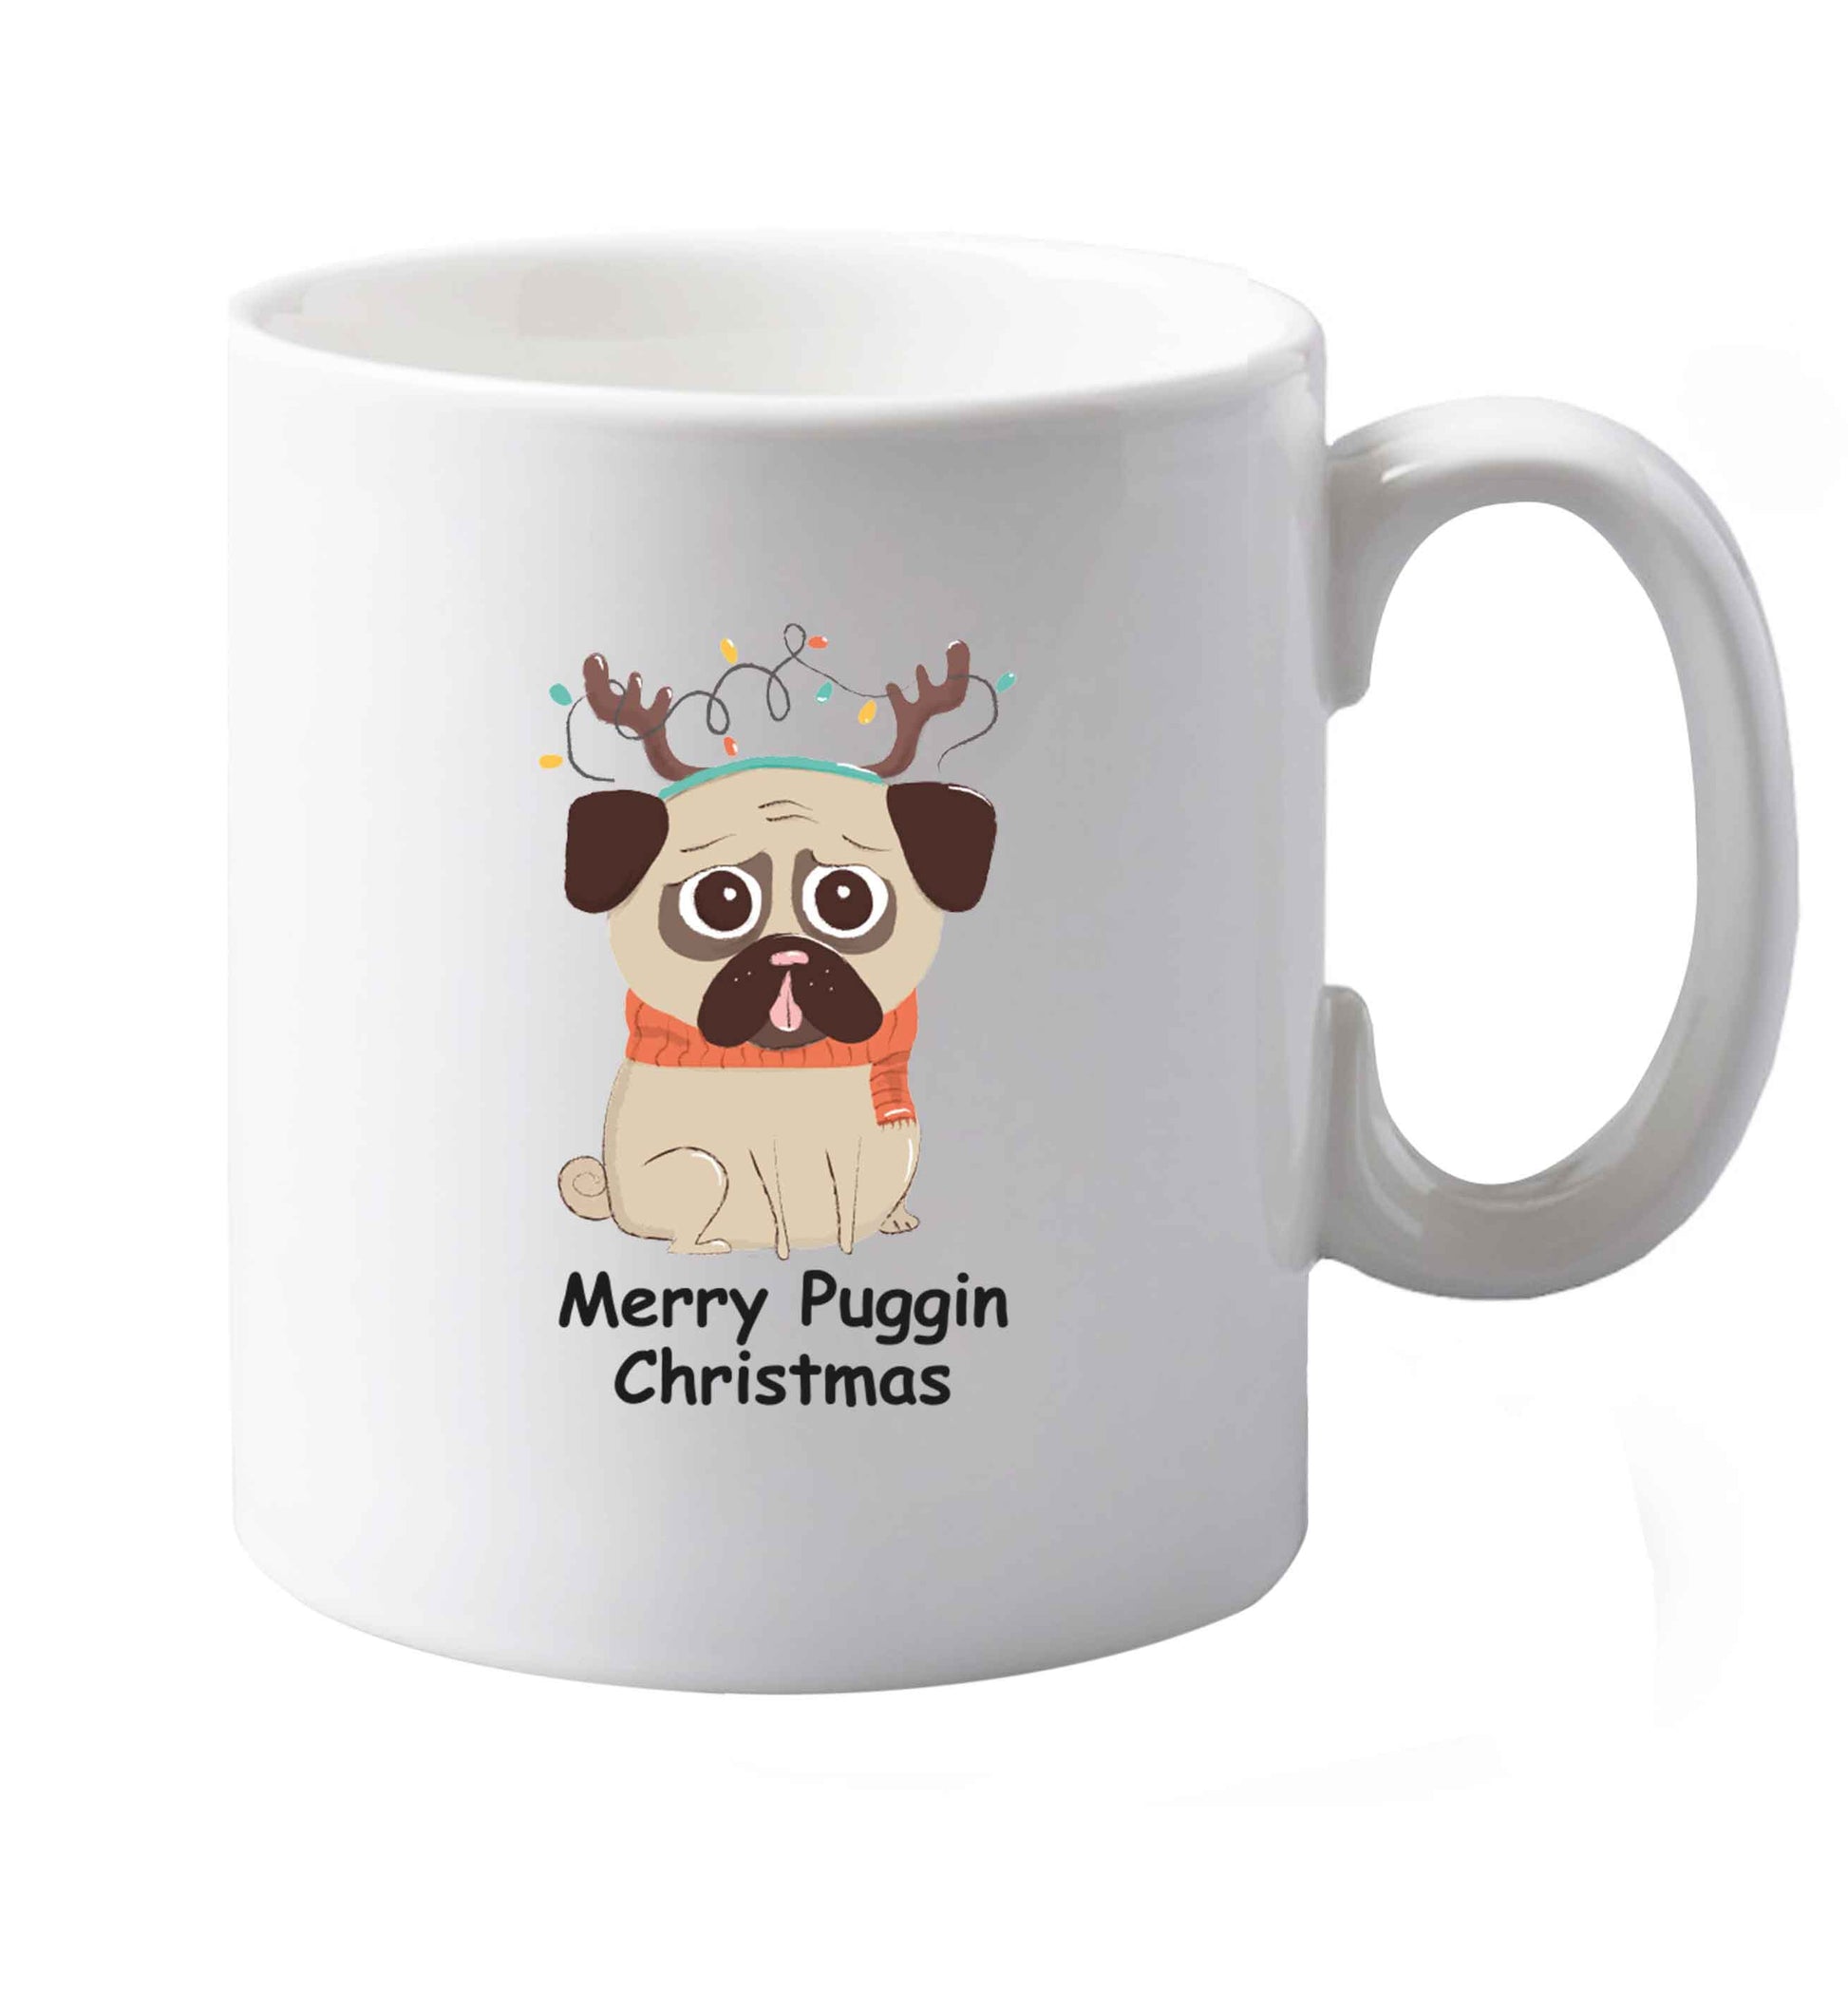 10 oz Merry puggin' Chirstmas ceramic mug both sides